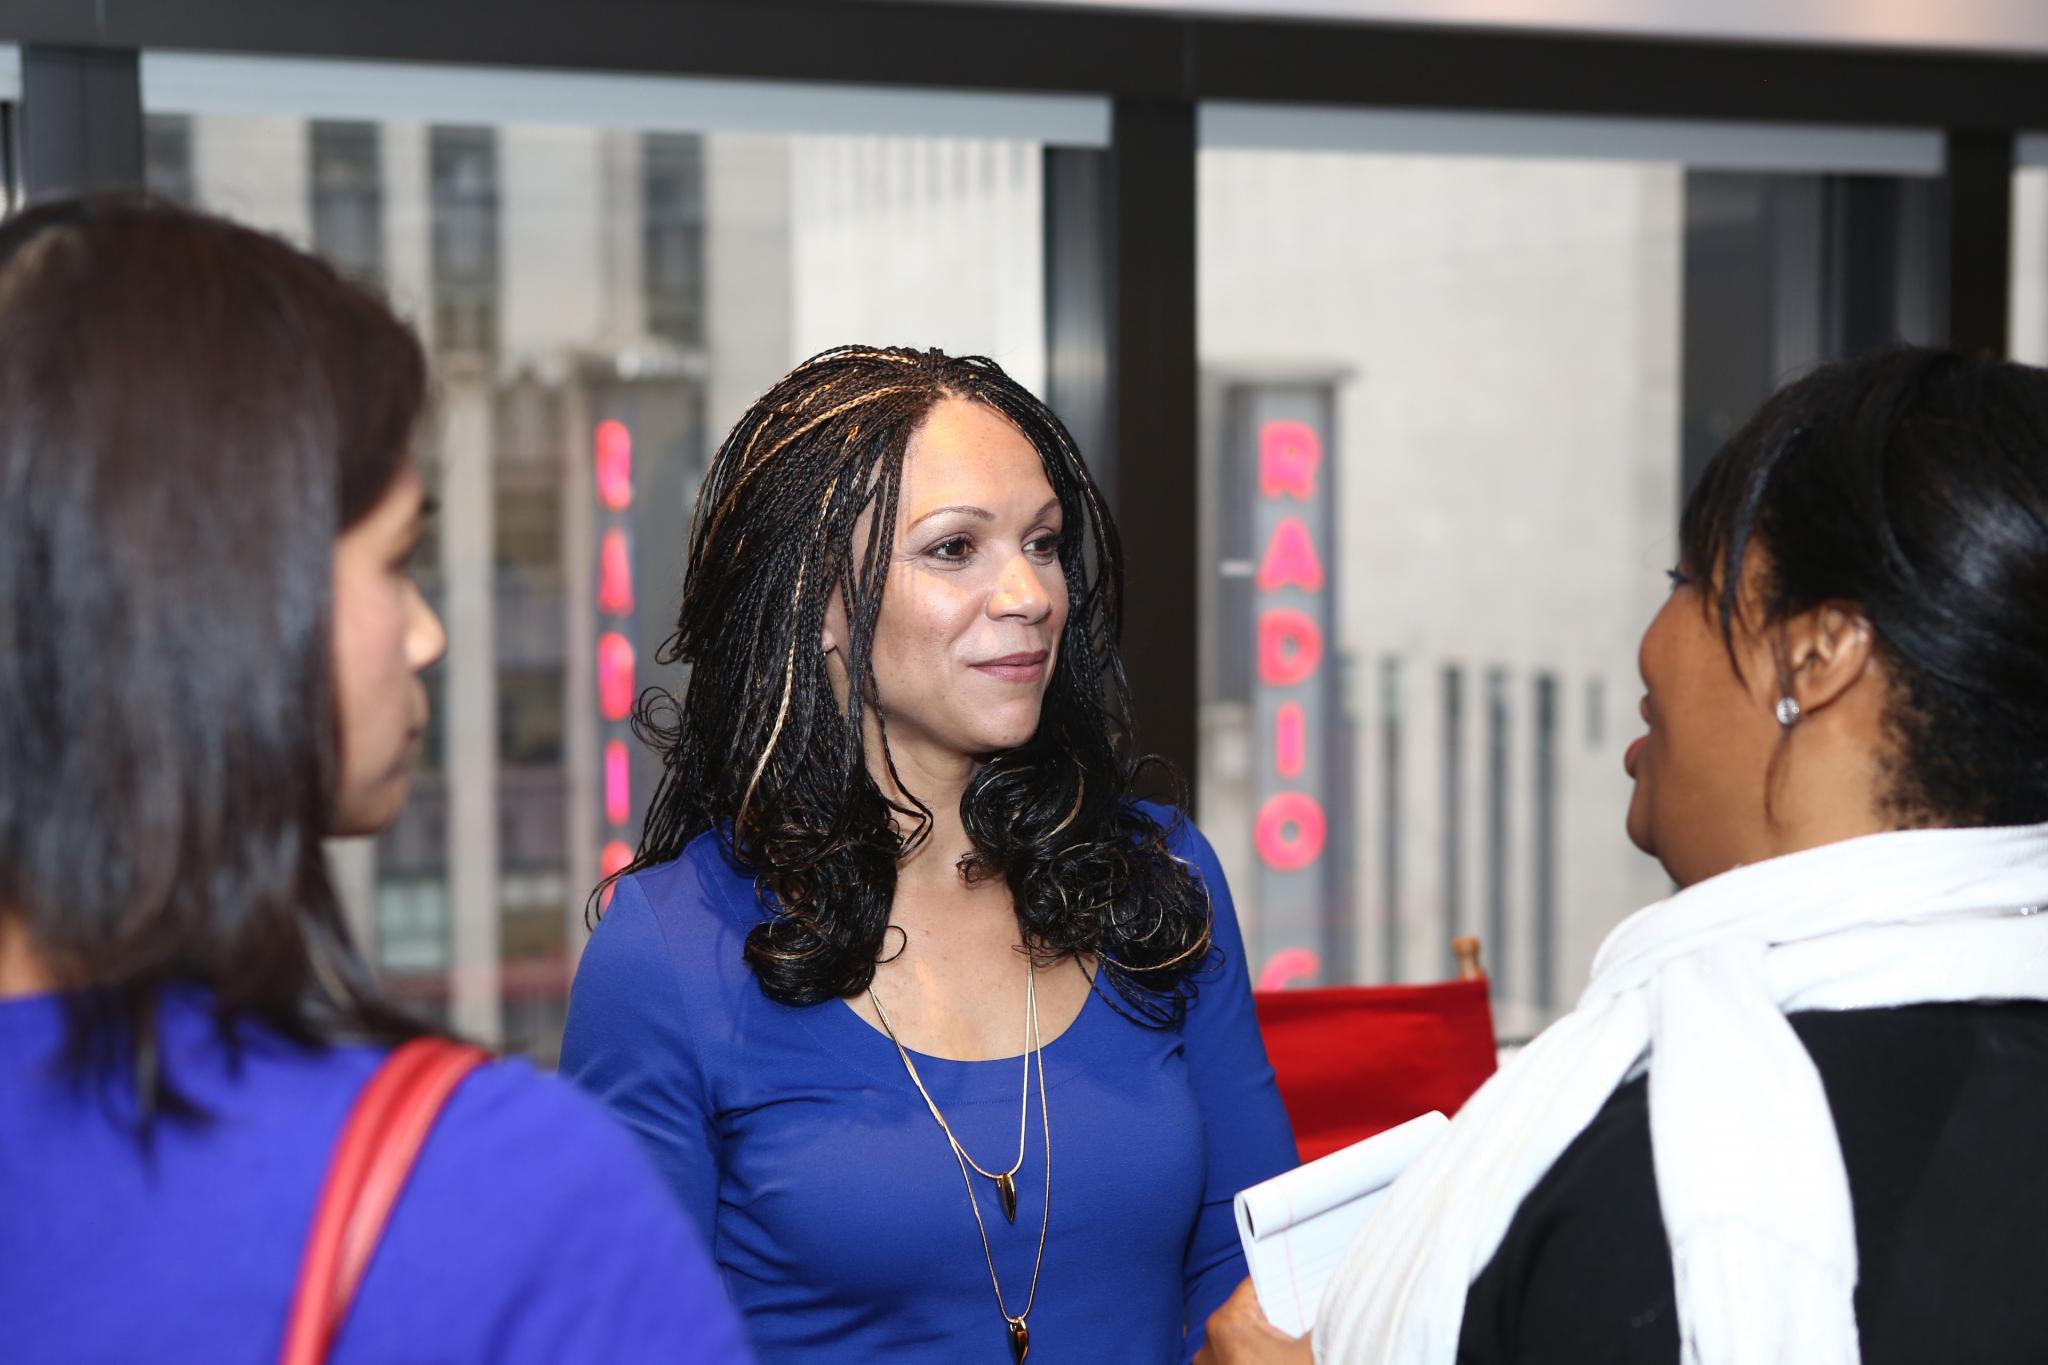 PHOTOS: Inside ESSENCE's Black Women at Work Panel